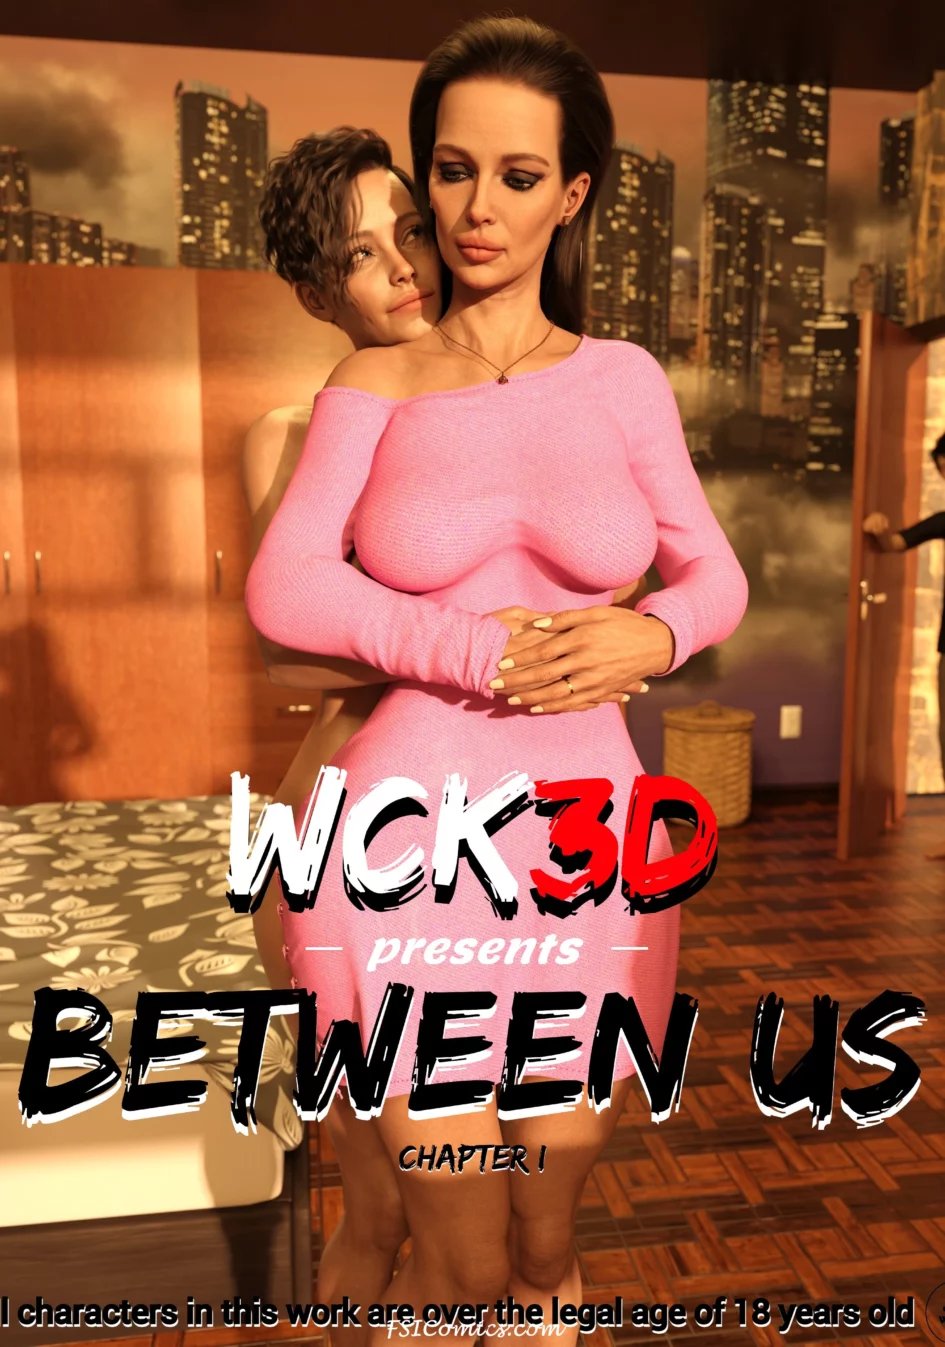 Between Us Chapter 1 - WCK3D - 39 - FSIComics